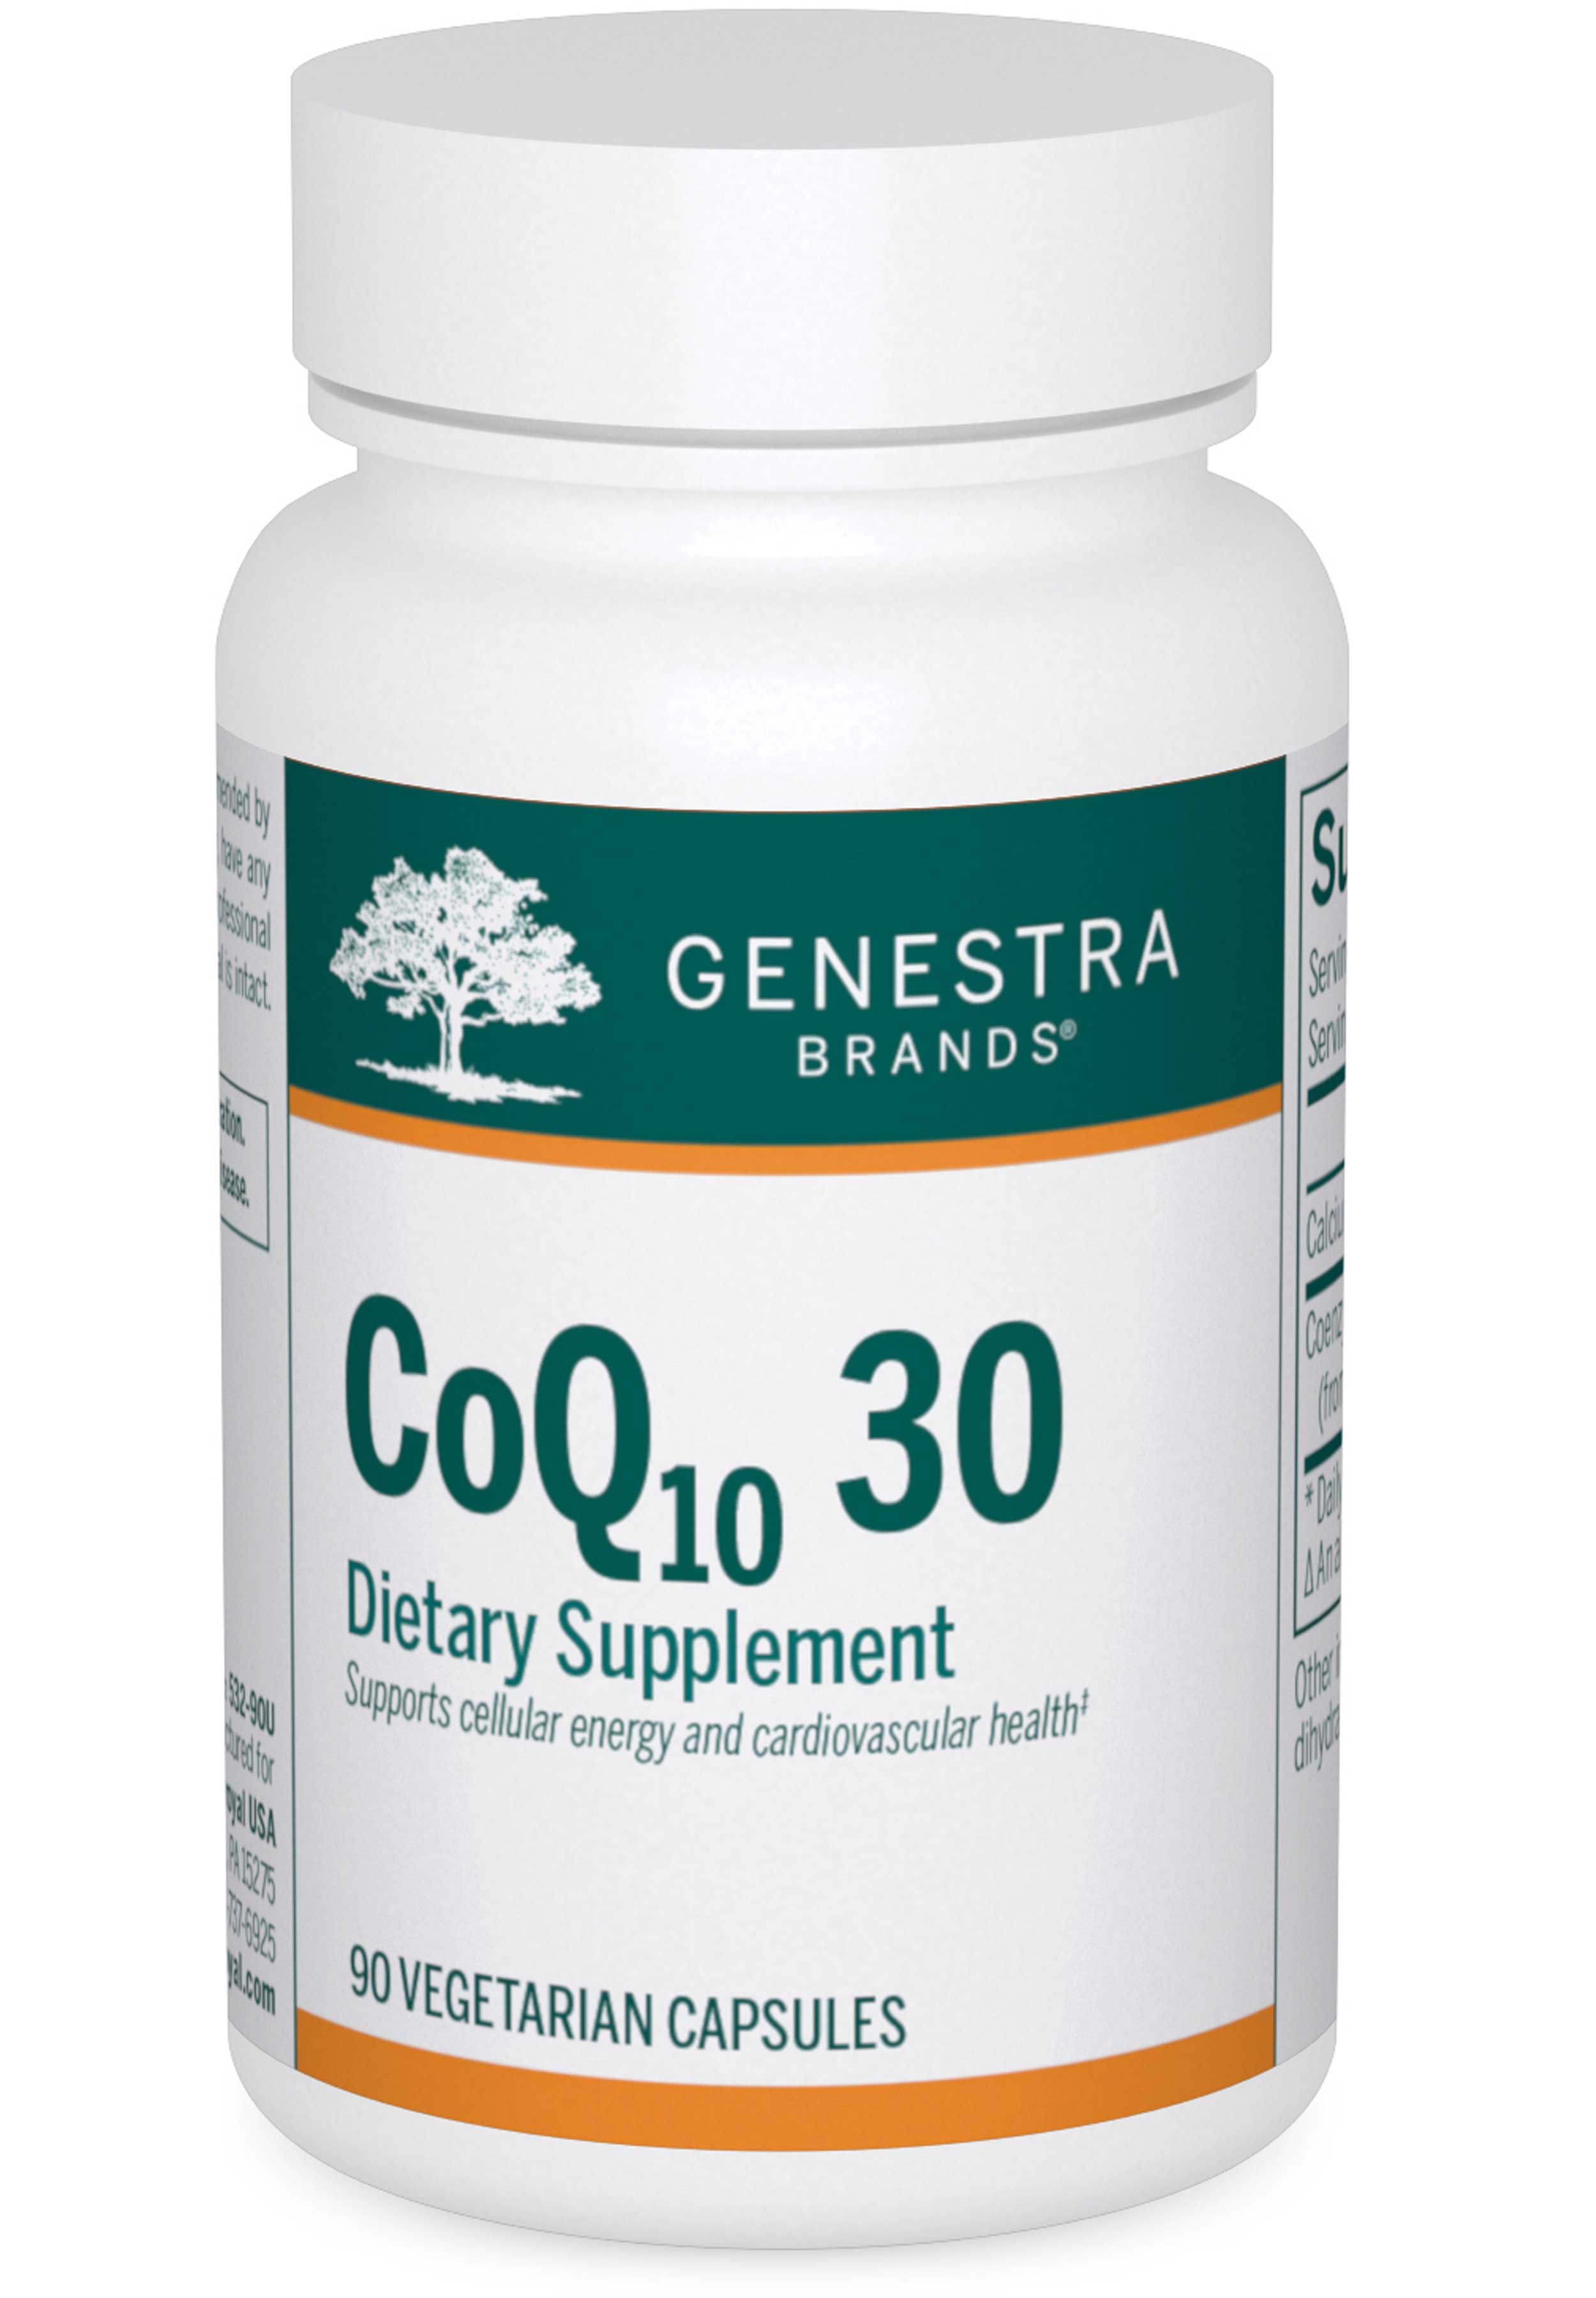 Genestra Brands CoQ10 30